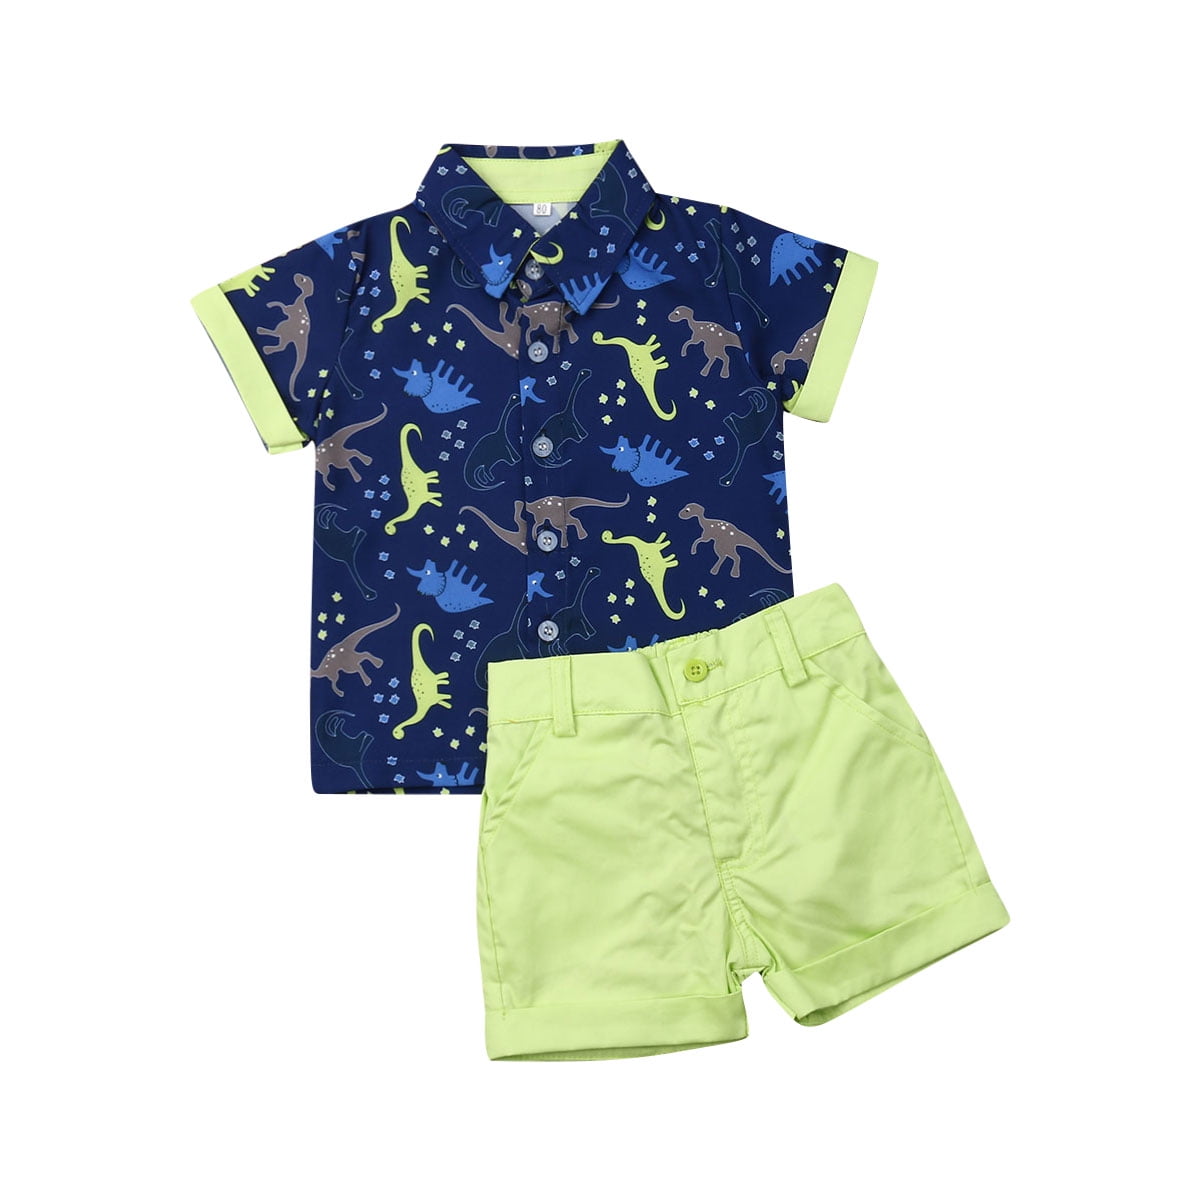 ShortsSet Toddler Baby Boys Dinosaur Shirt Outfits Clothes Short Sleeve Tops 